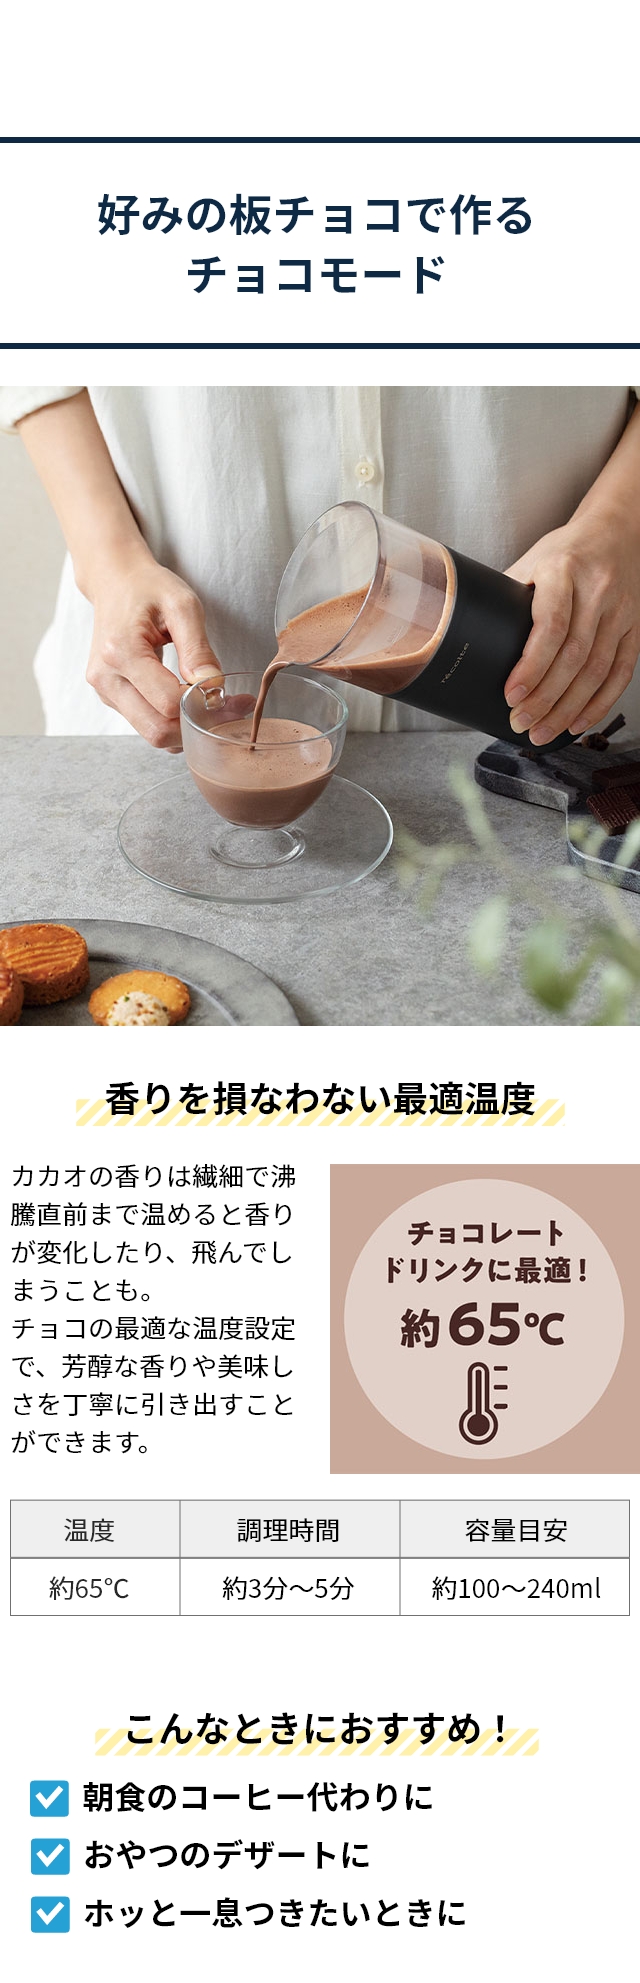 recolte (レコルト) チョコレートドリンクメーカー (Chocolate Drink Maker) RMT-2